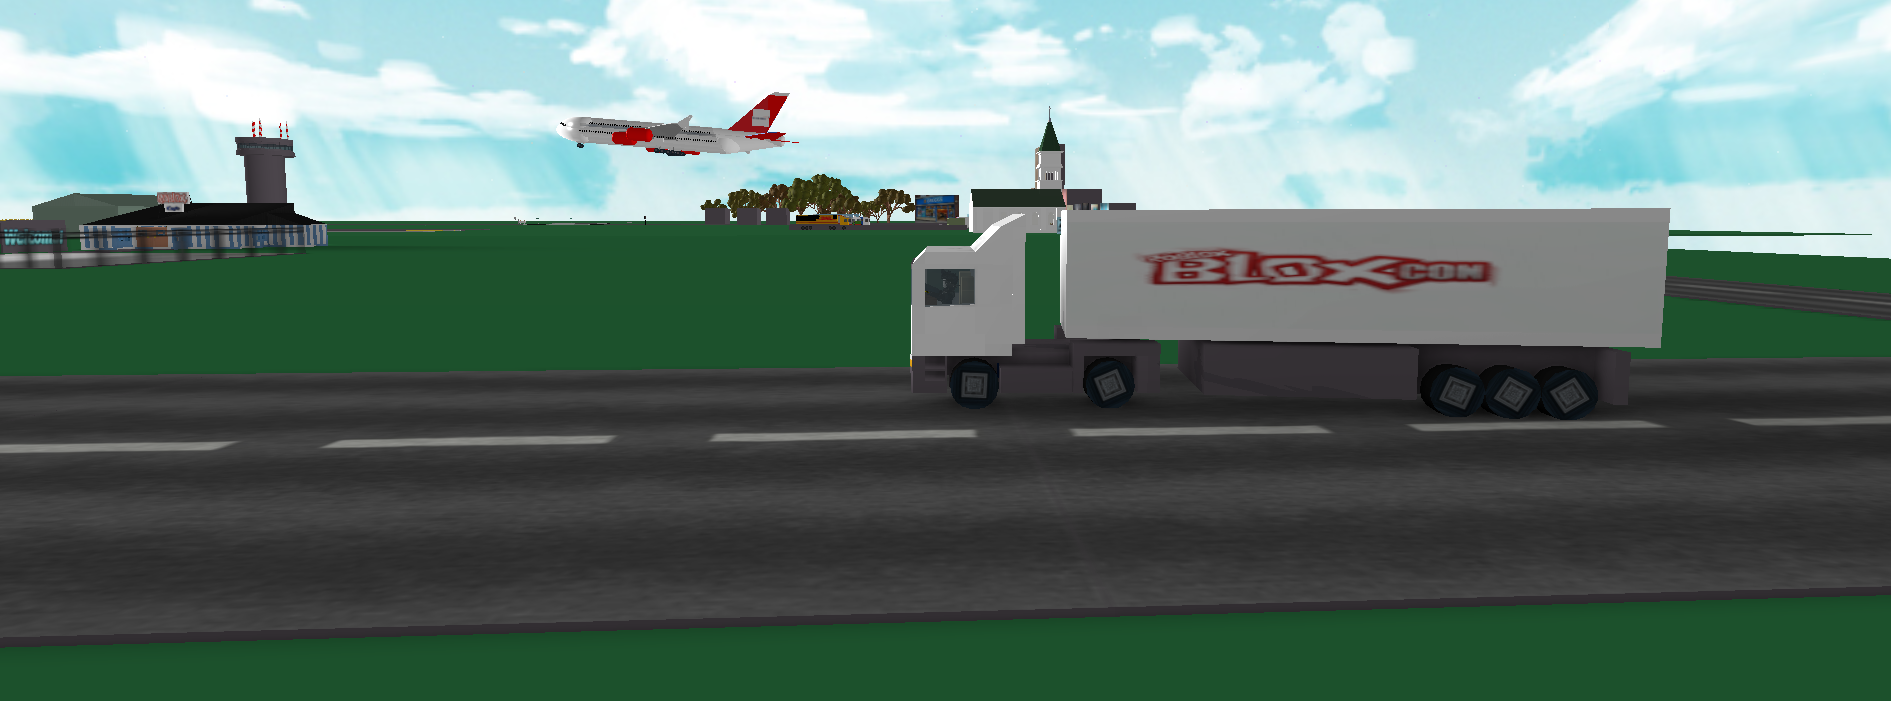 Spotlight Manyfireman S Ro Scania Trucking Simulator Roblox Blog - roblox games with trucks in them